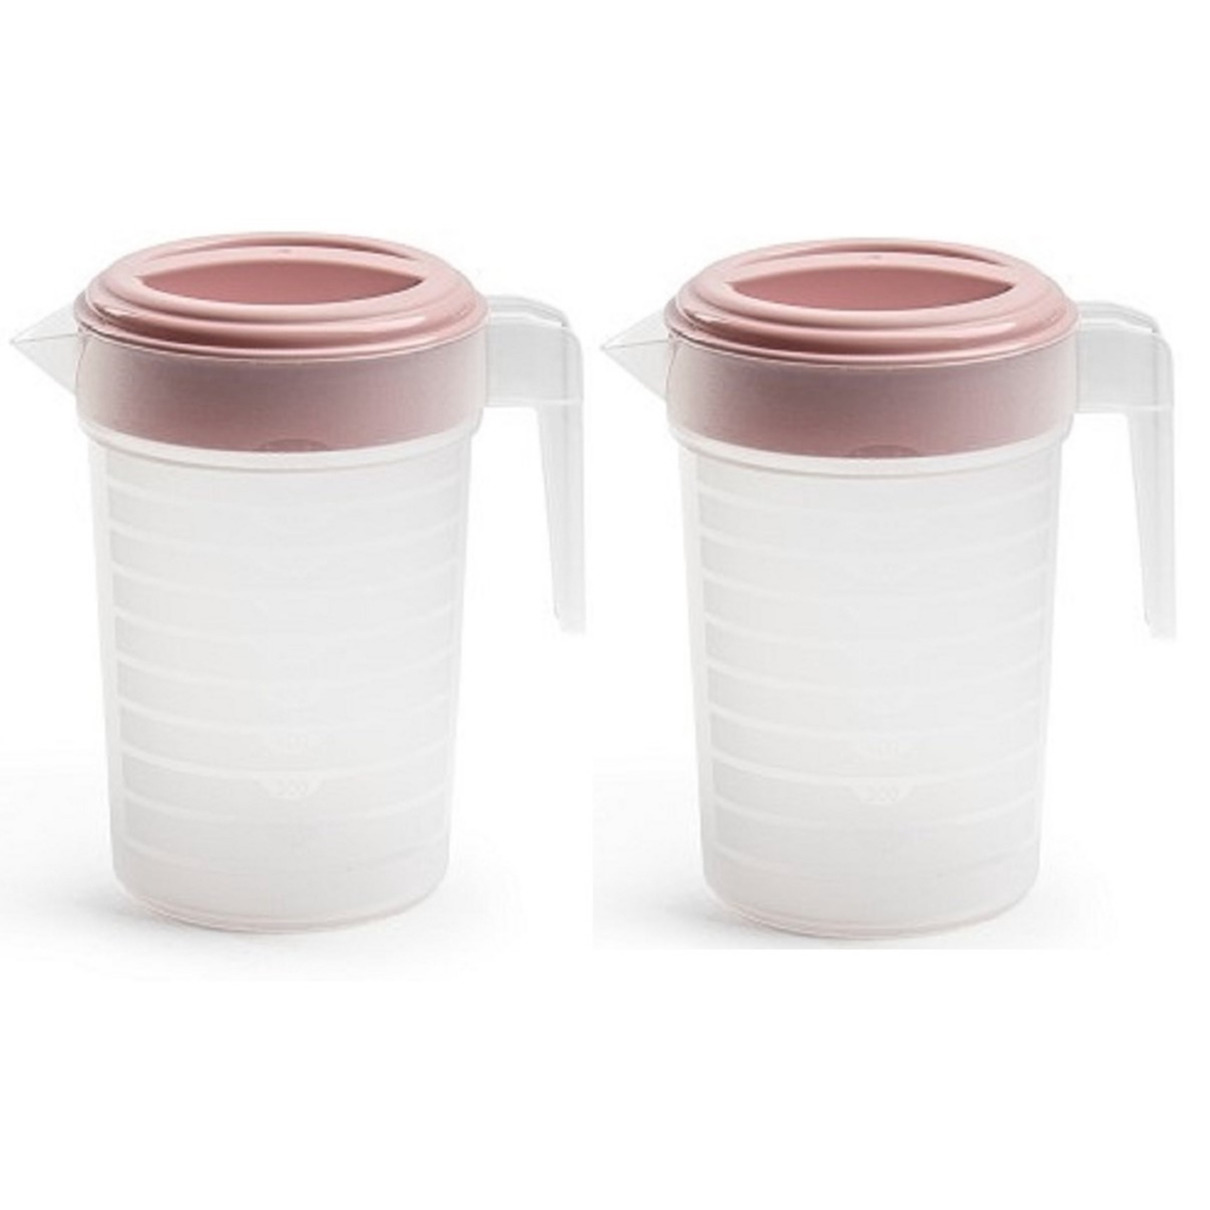 PlasticForte 2x stuks waterkan/sapkan transparant/roze met deksel 1 liter kunststof -